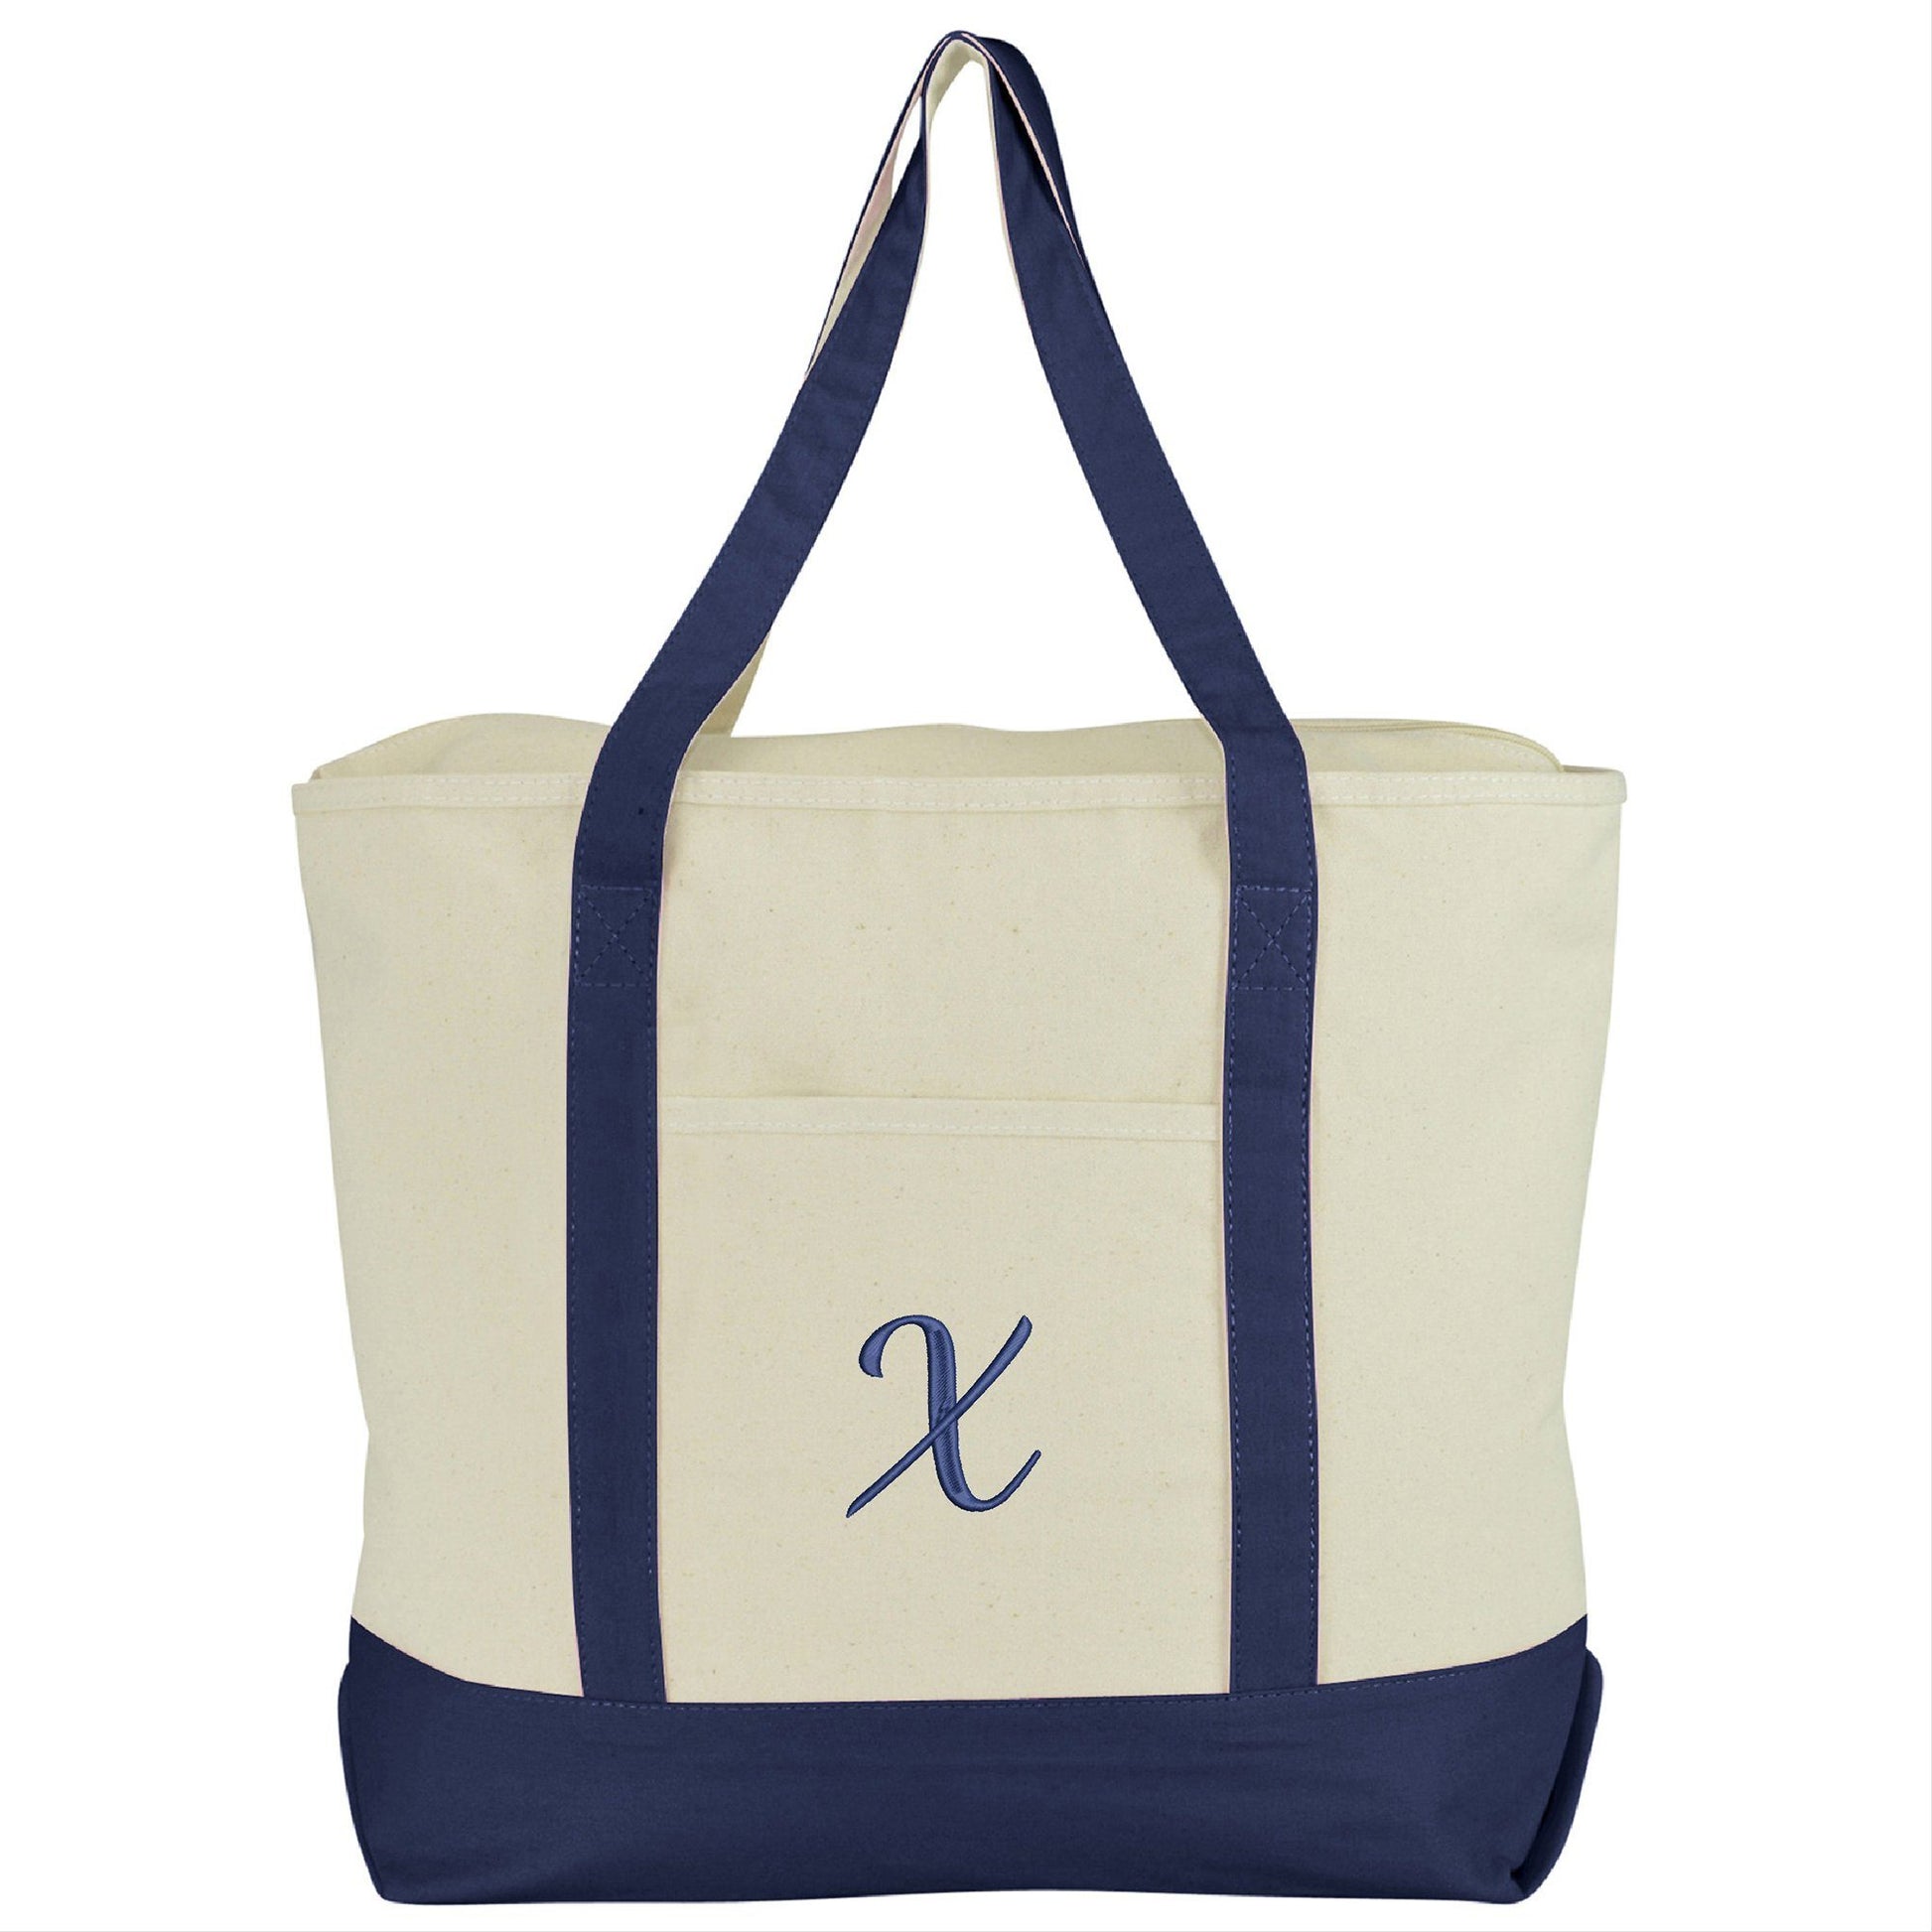 DALIX Personalized Tote Bag Monogram Navy Blue A-Z Bags DALIX X Navy Blue 